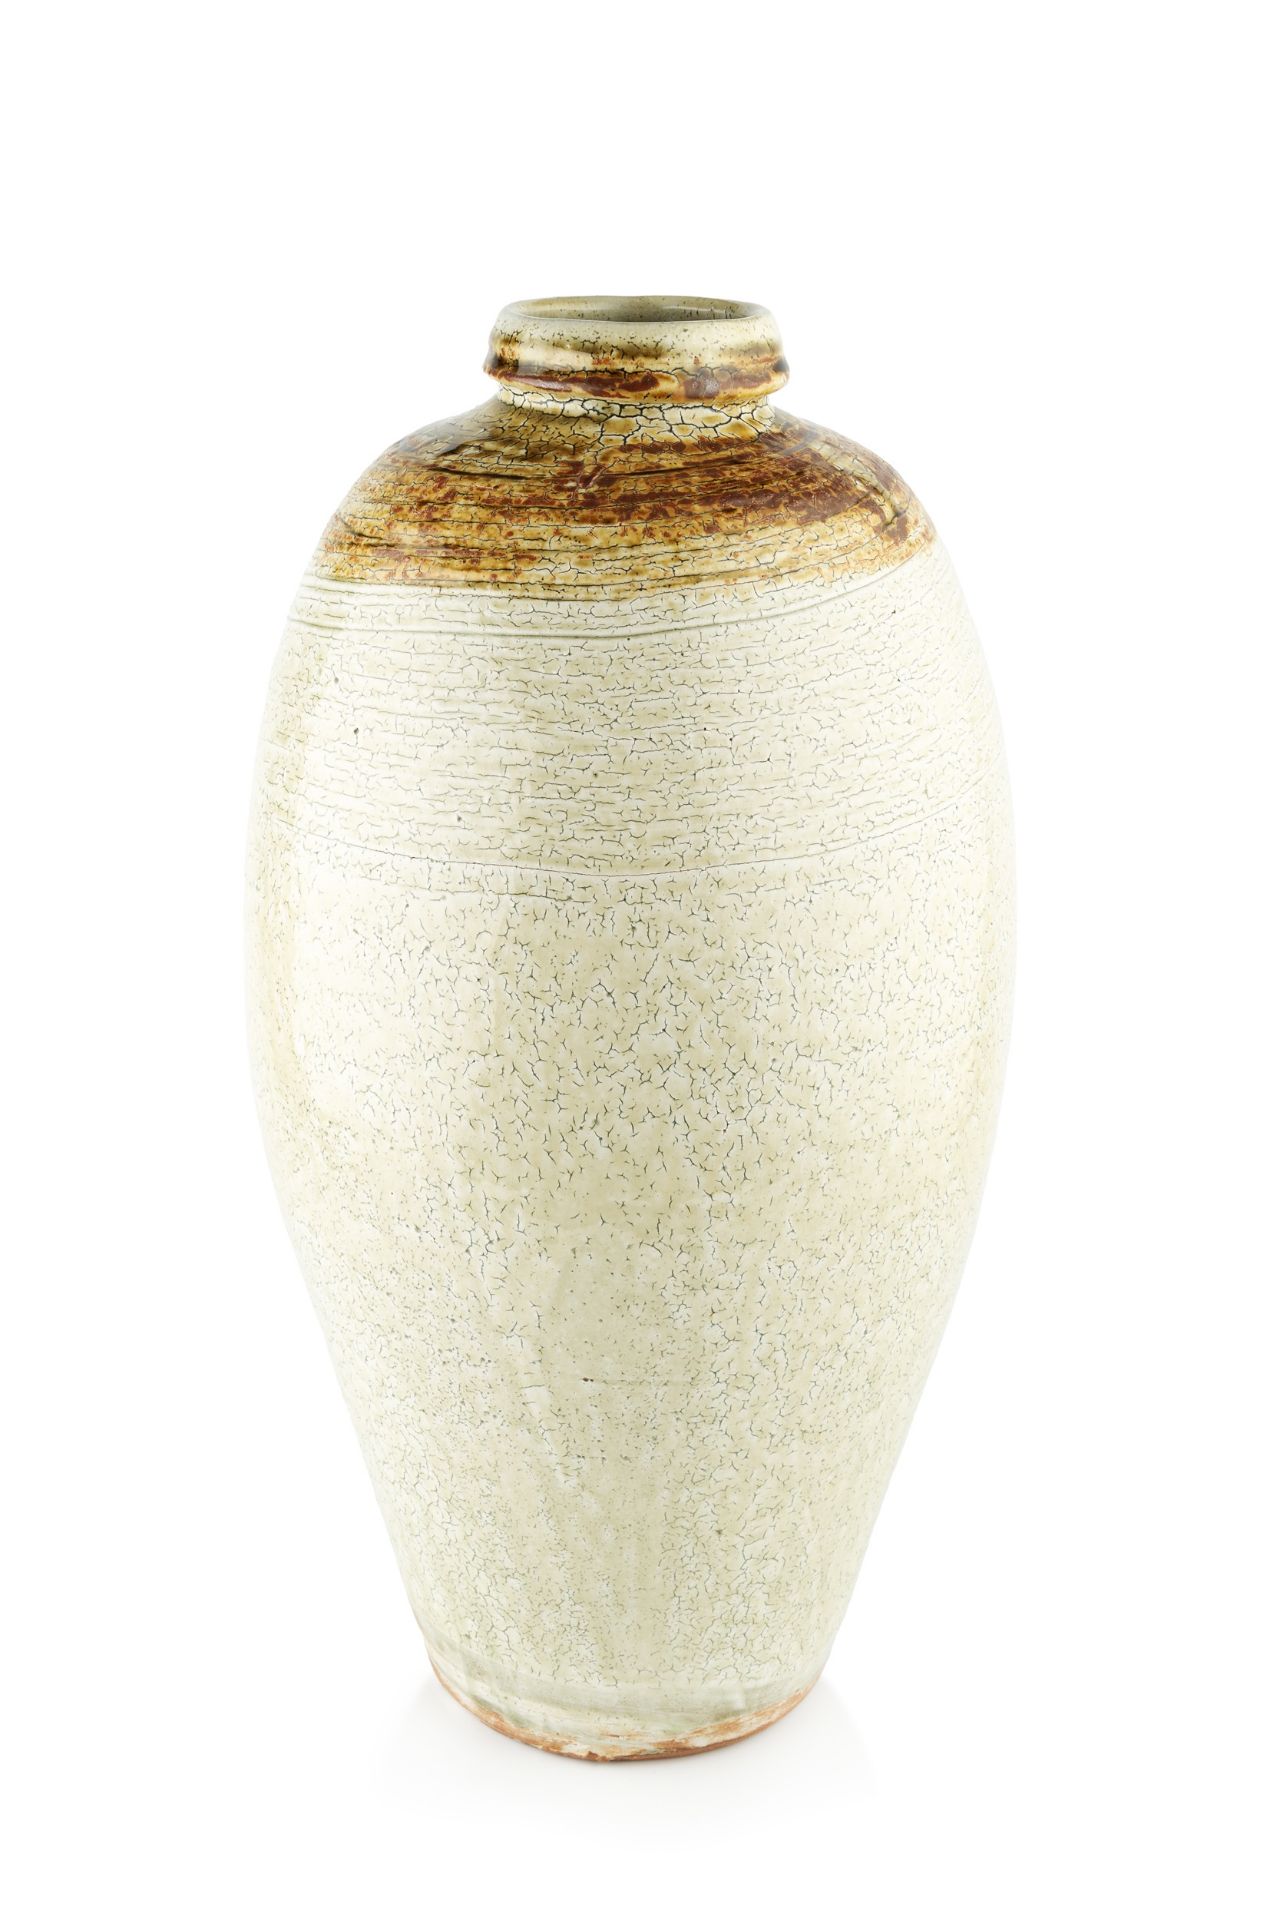 Mike Dodd (b.1943) Large vase stoneware, with crackled oatmeal glaze impressed potter's seal 48.